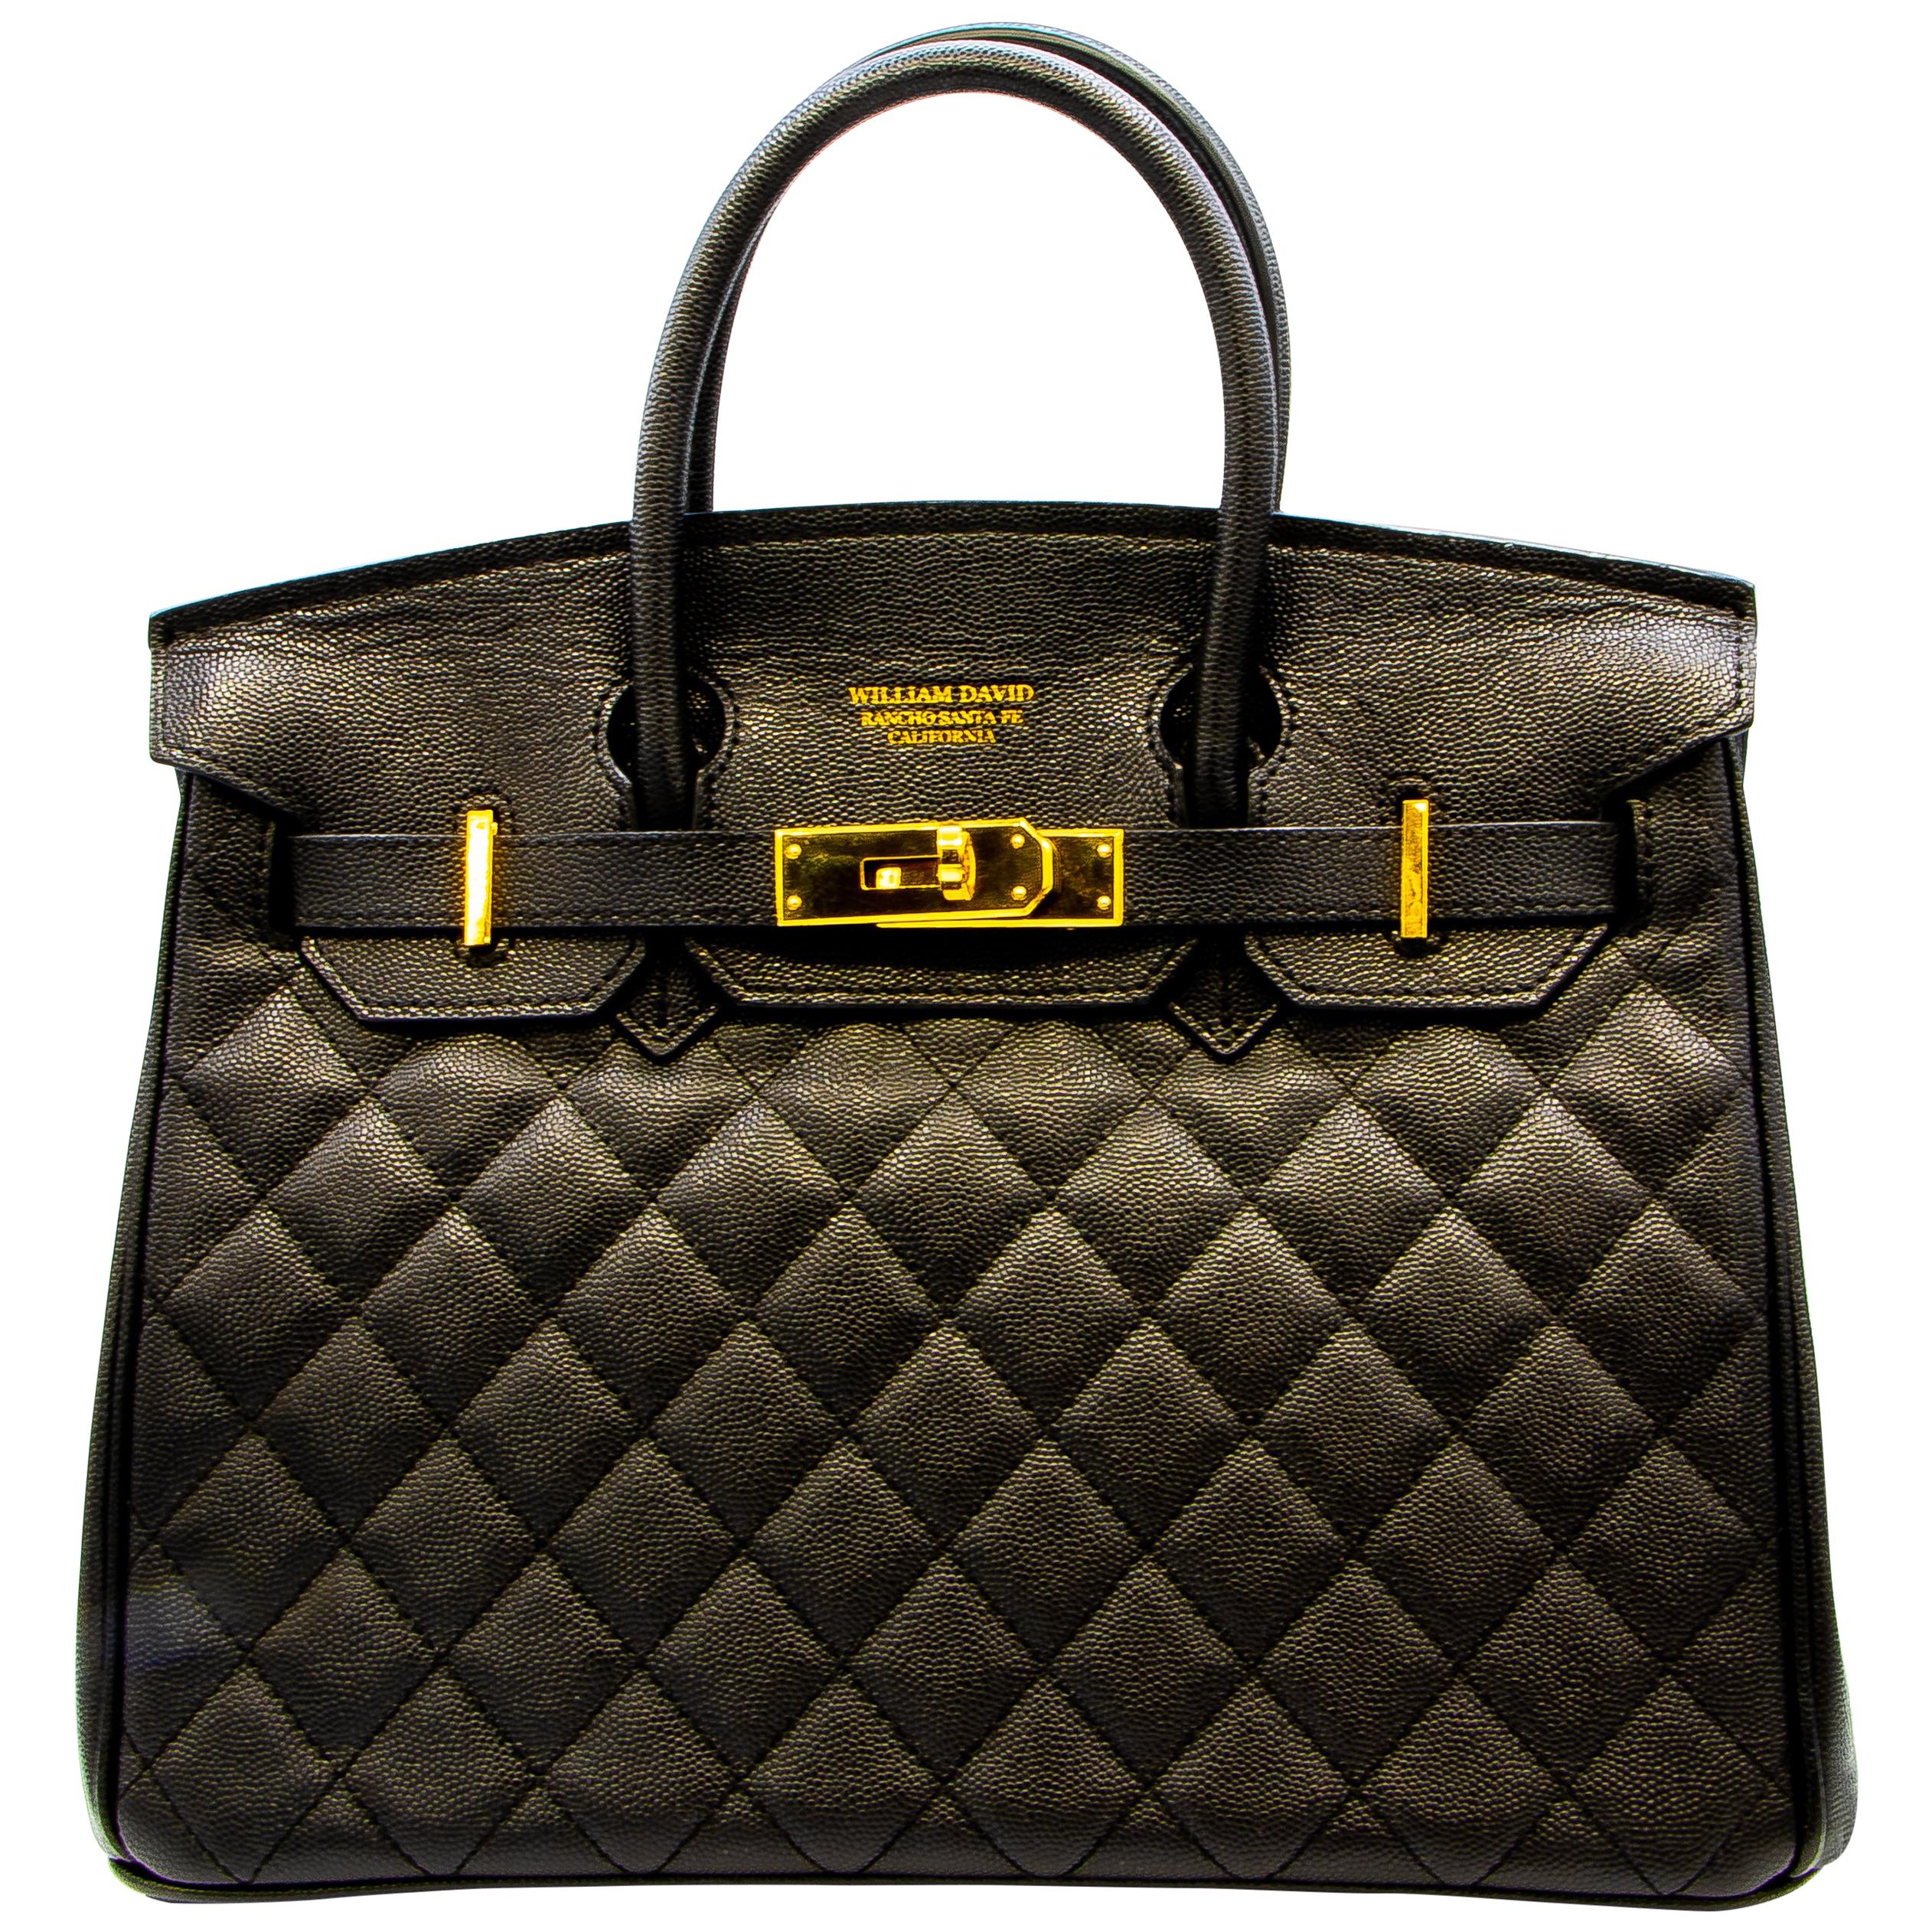 New William David Leather Handbag